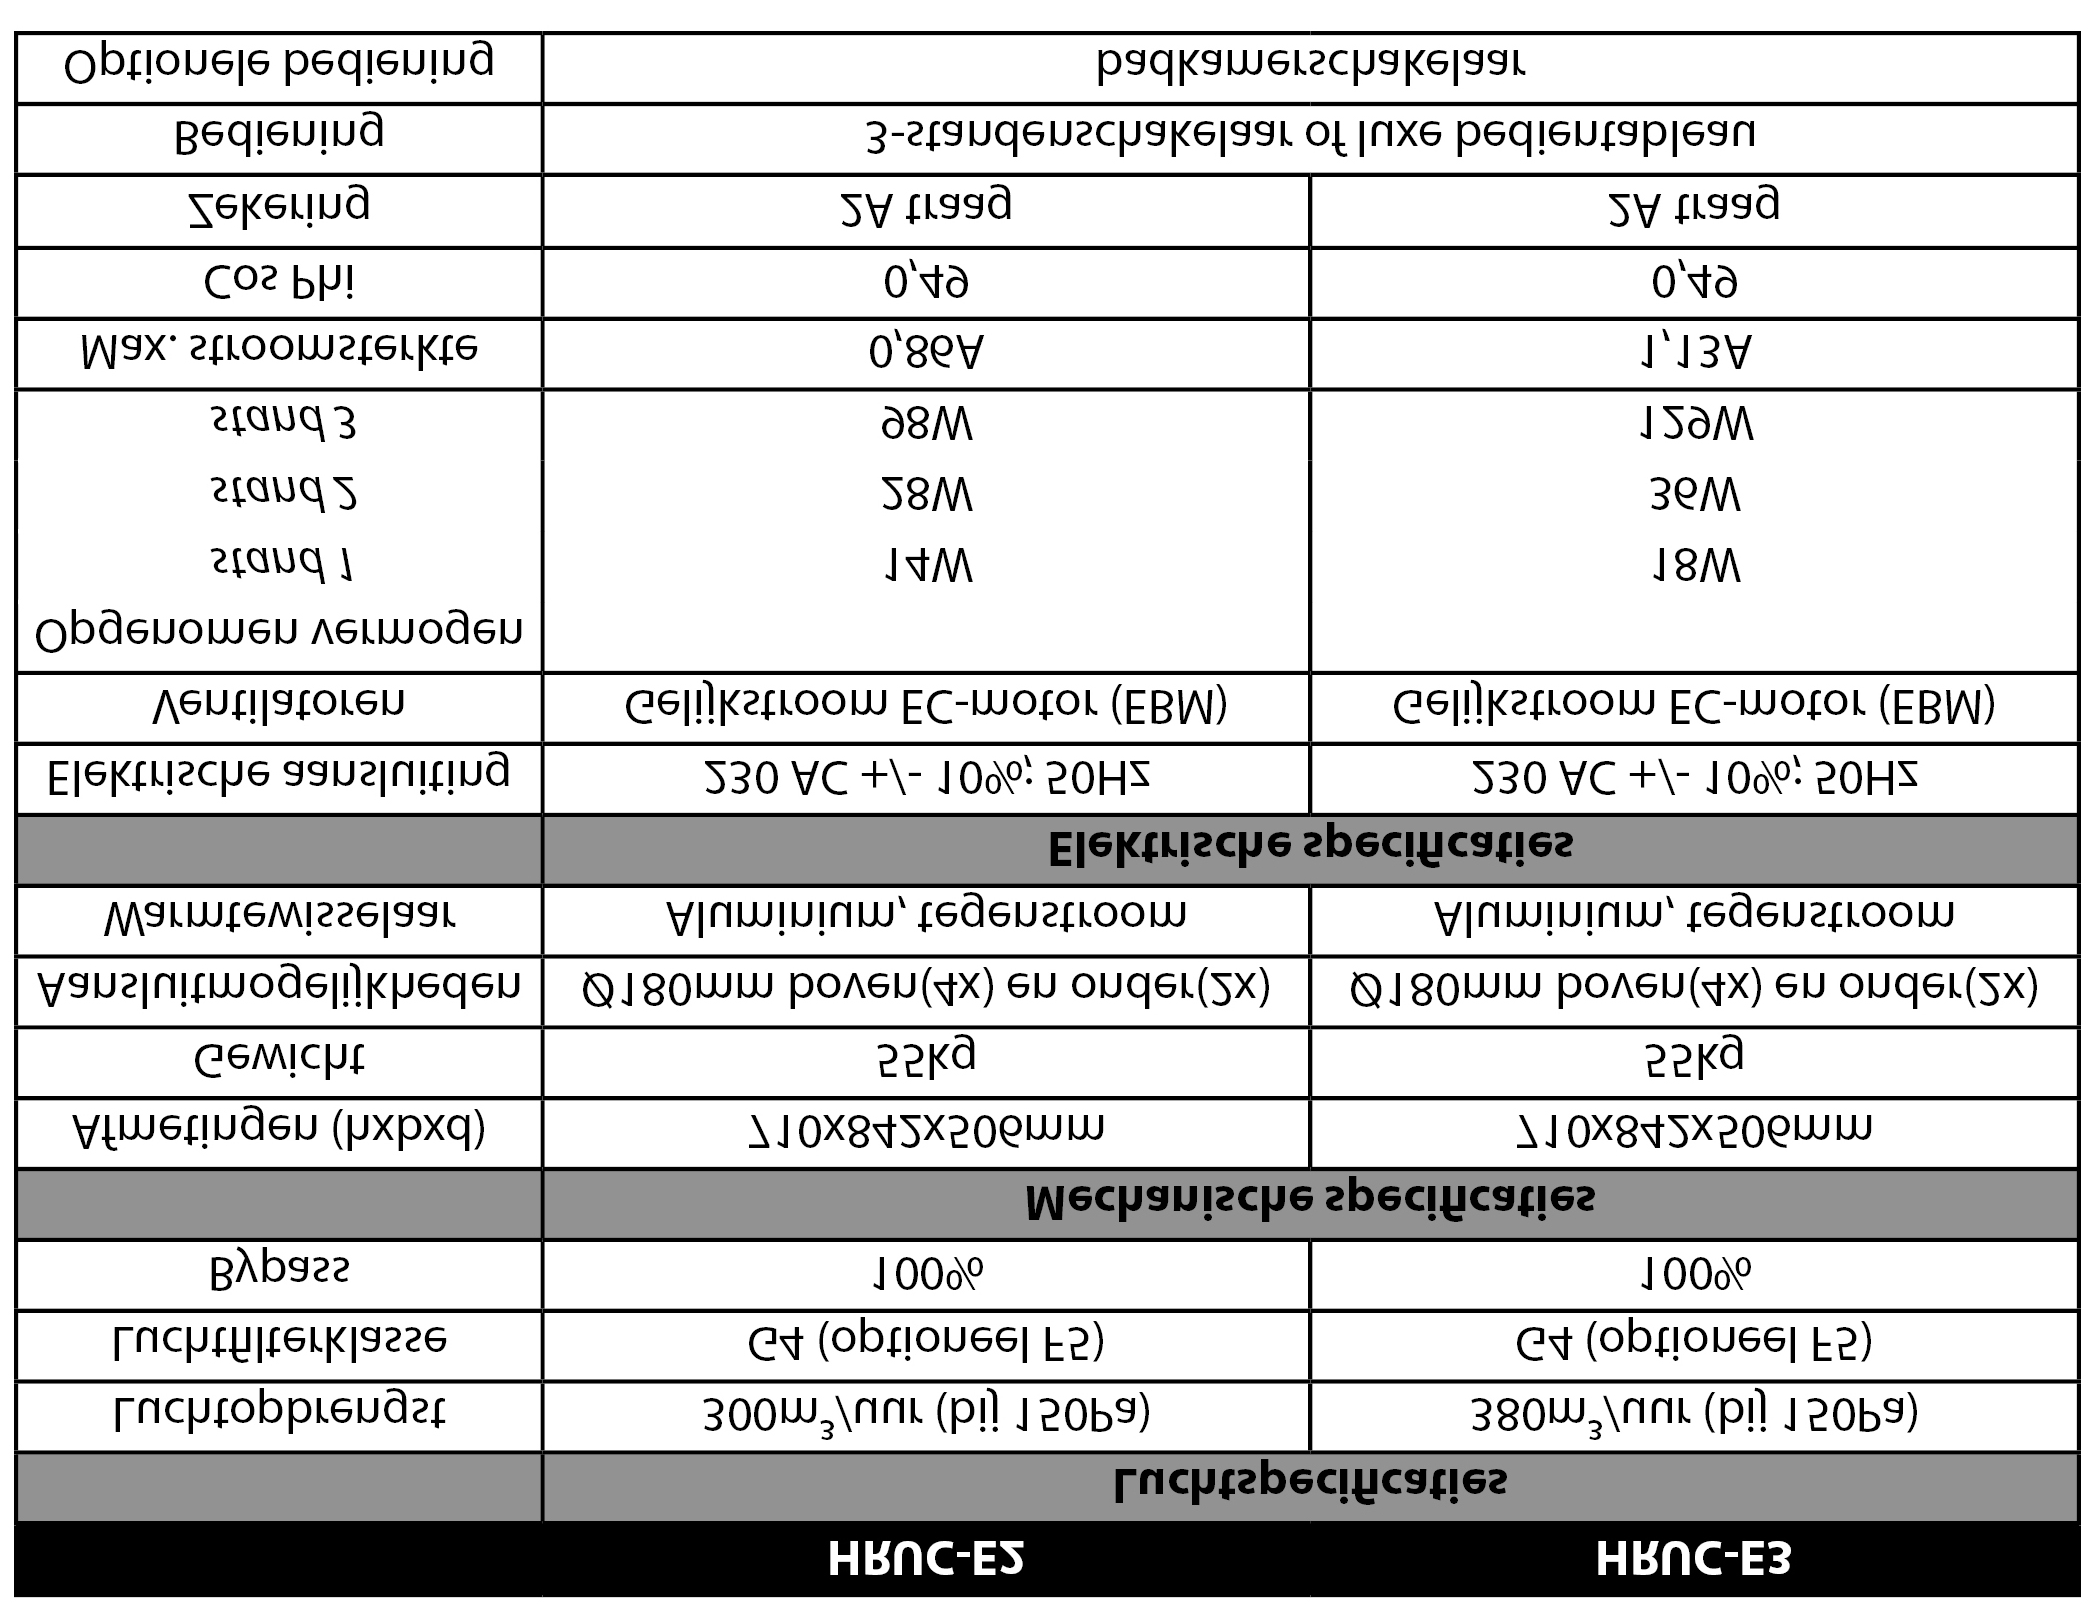 VI Specificaties HRUC-E 6.